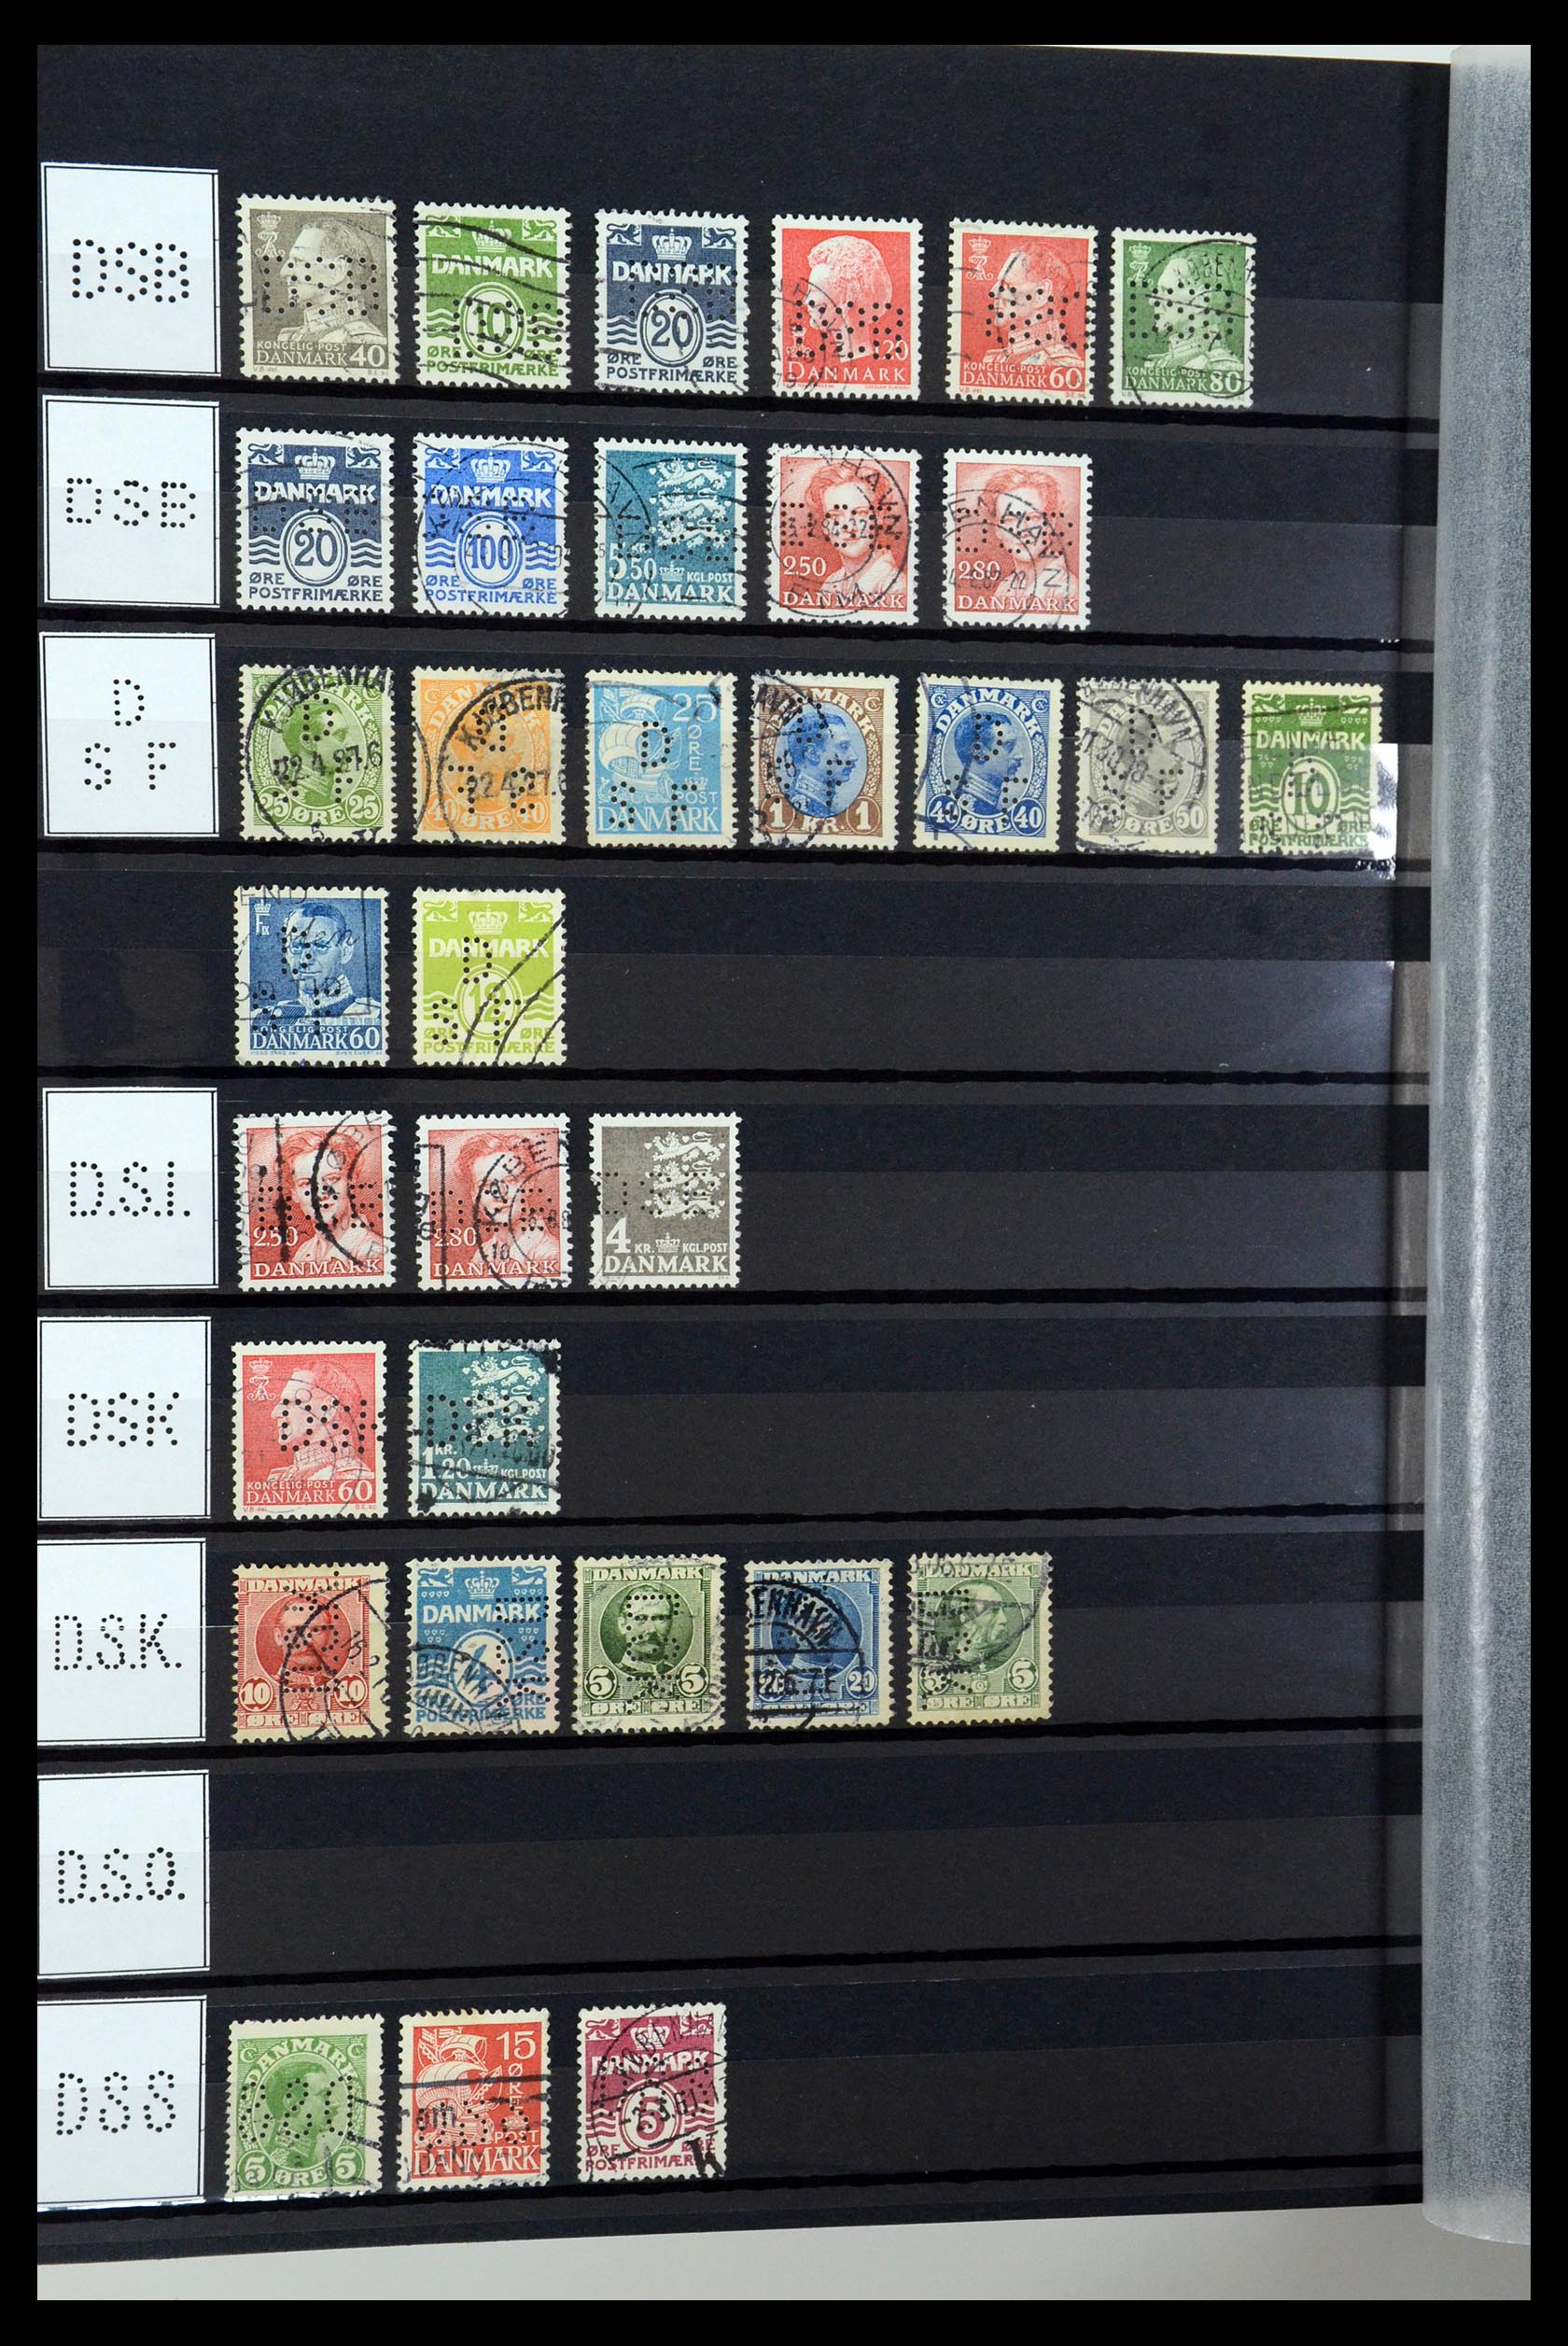 36396 041 - Stamp collection 36396 Denmark perfins.